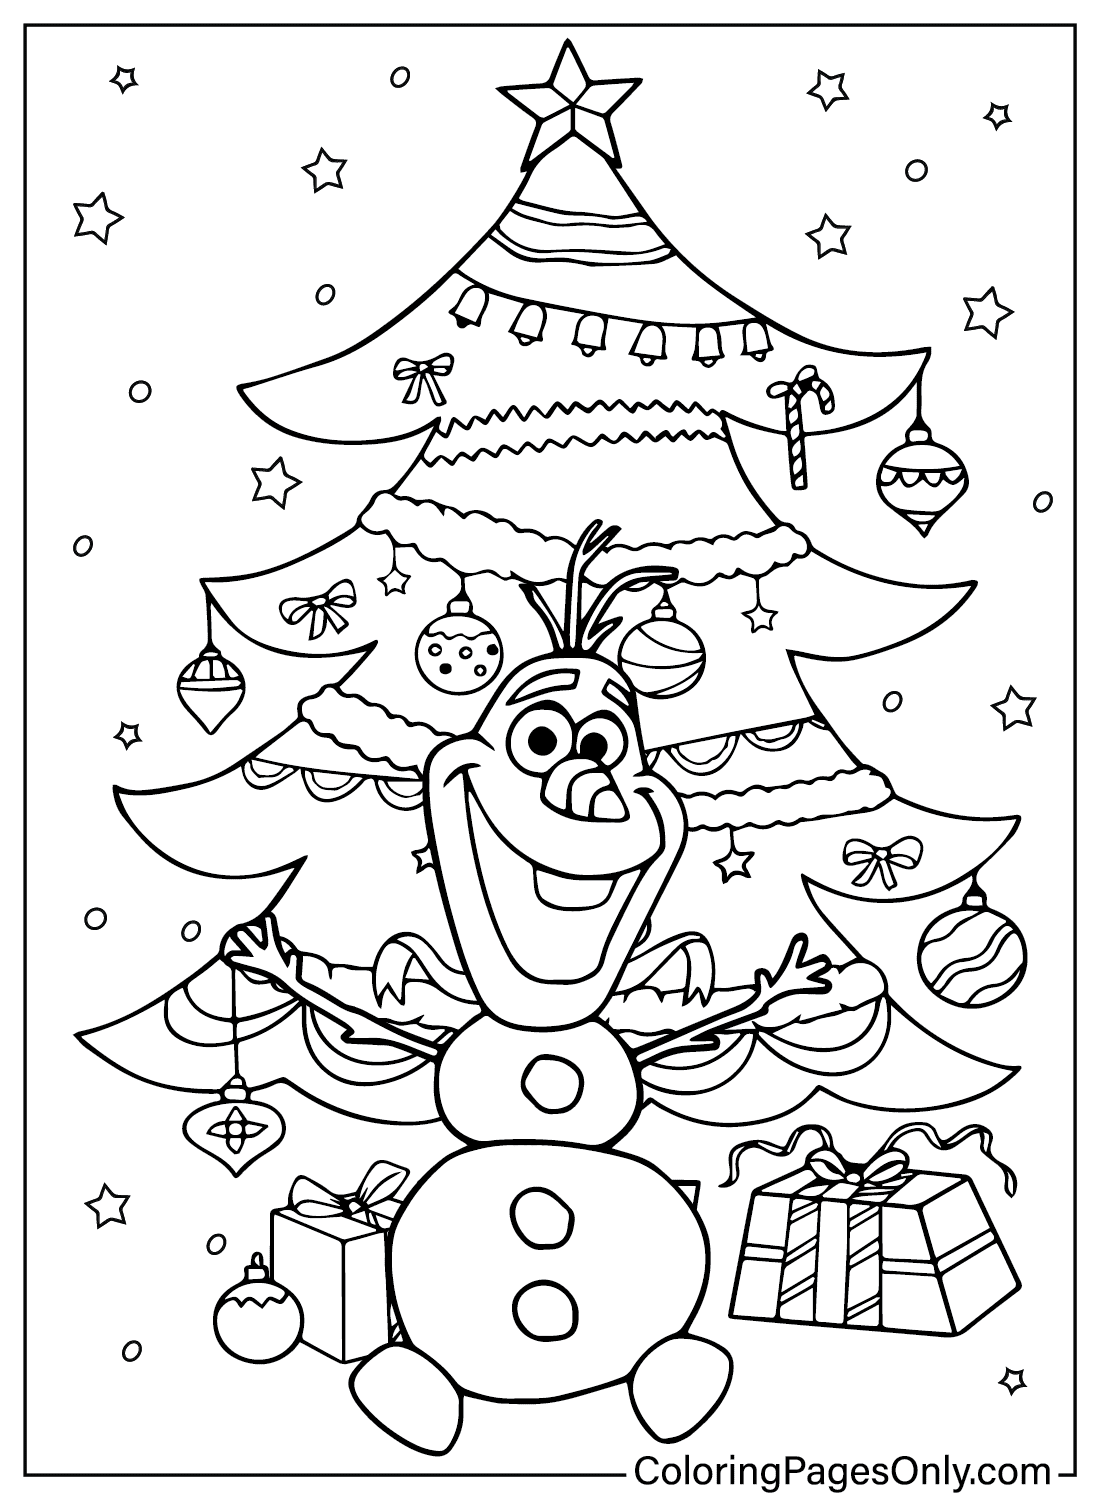 Cartoon Snowman Coloring Page